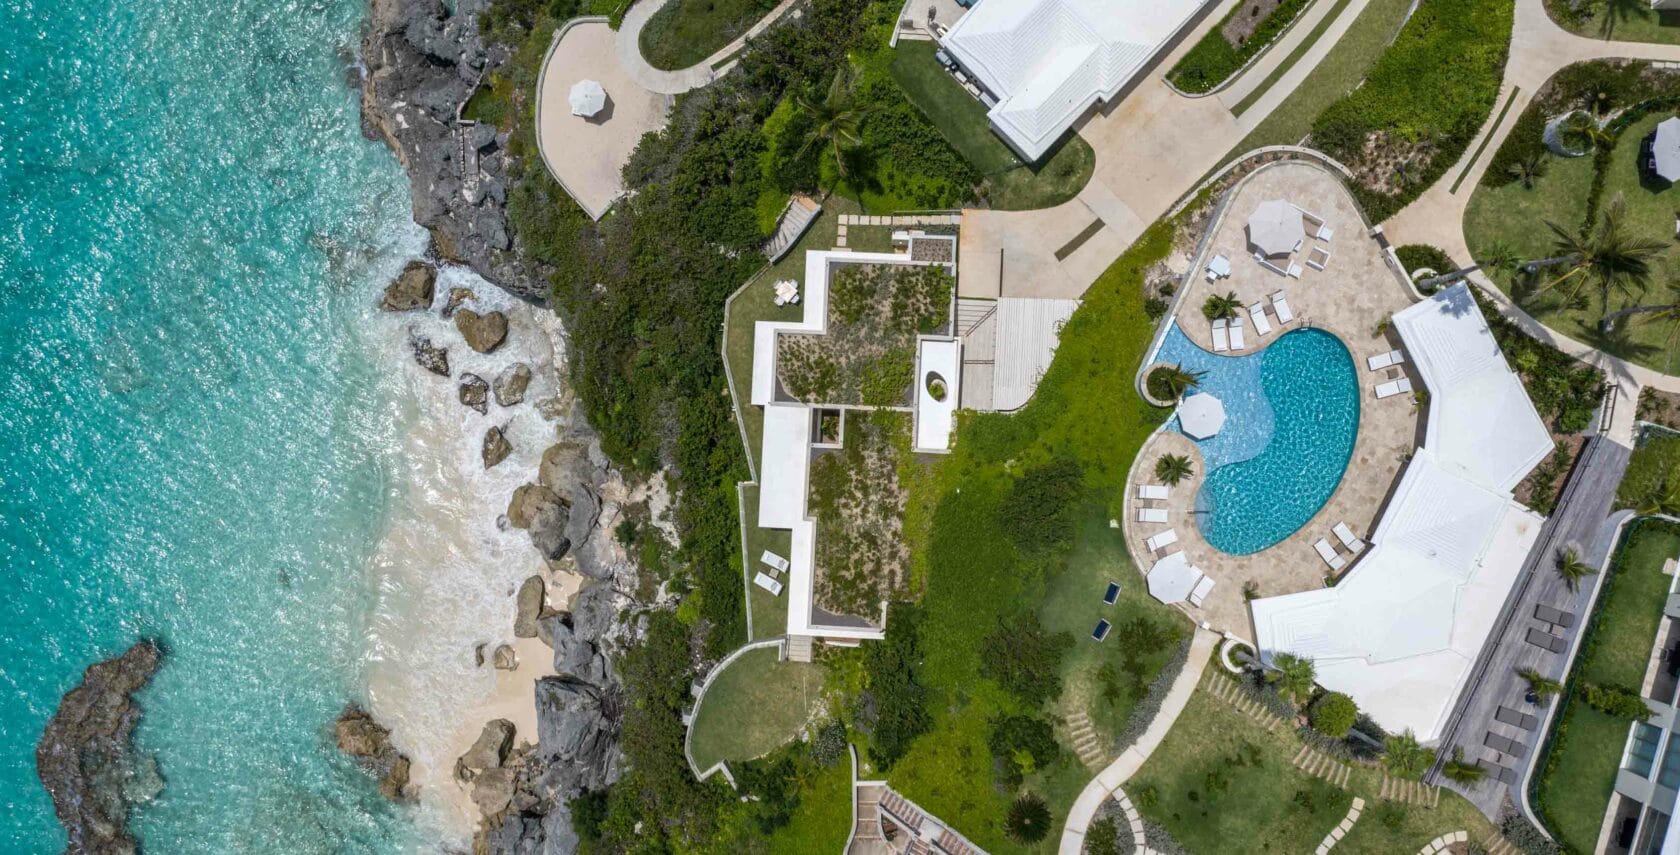 An aerial view of a house, pool, cliffs, and a beach.